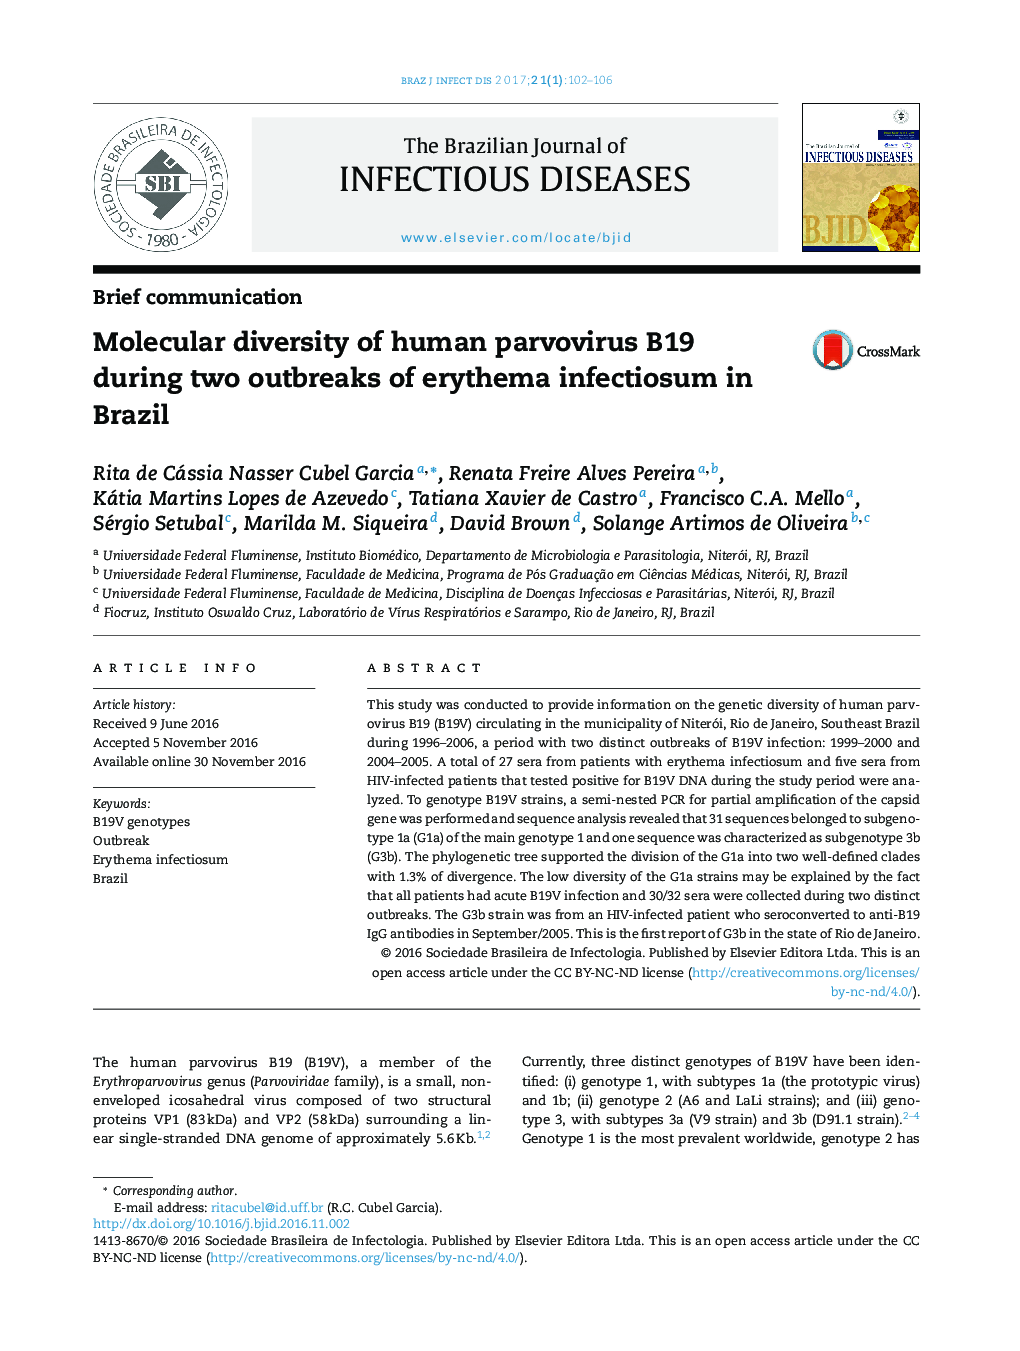 Molecular diversity of human parvovirus B19 during two outbreaks of erythema infectiosum in Brazil